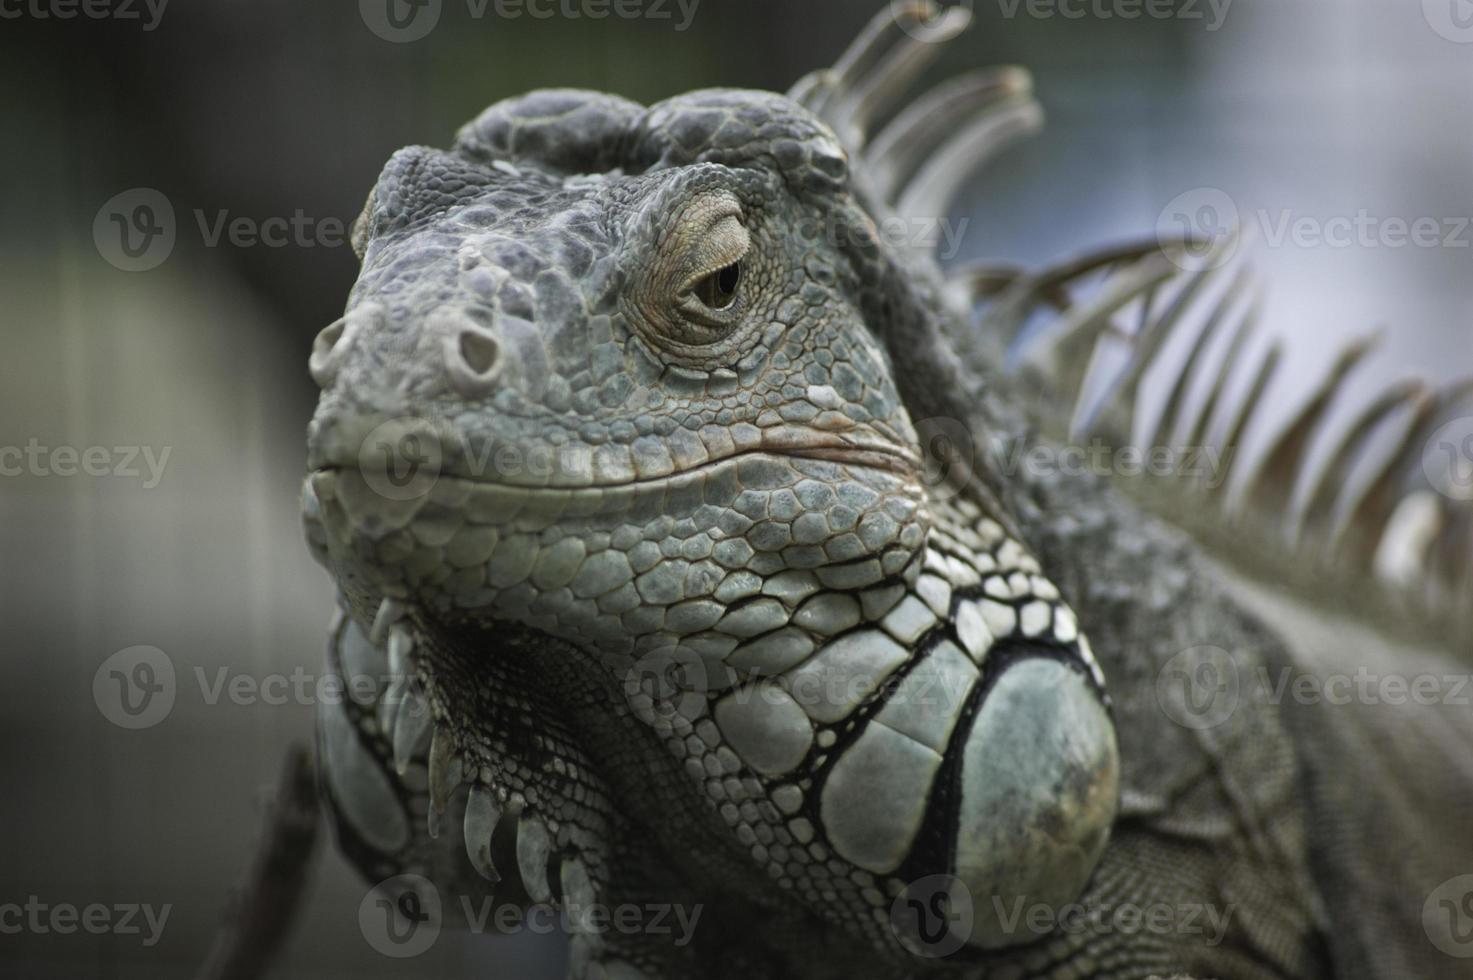 Green iguana photo